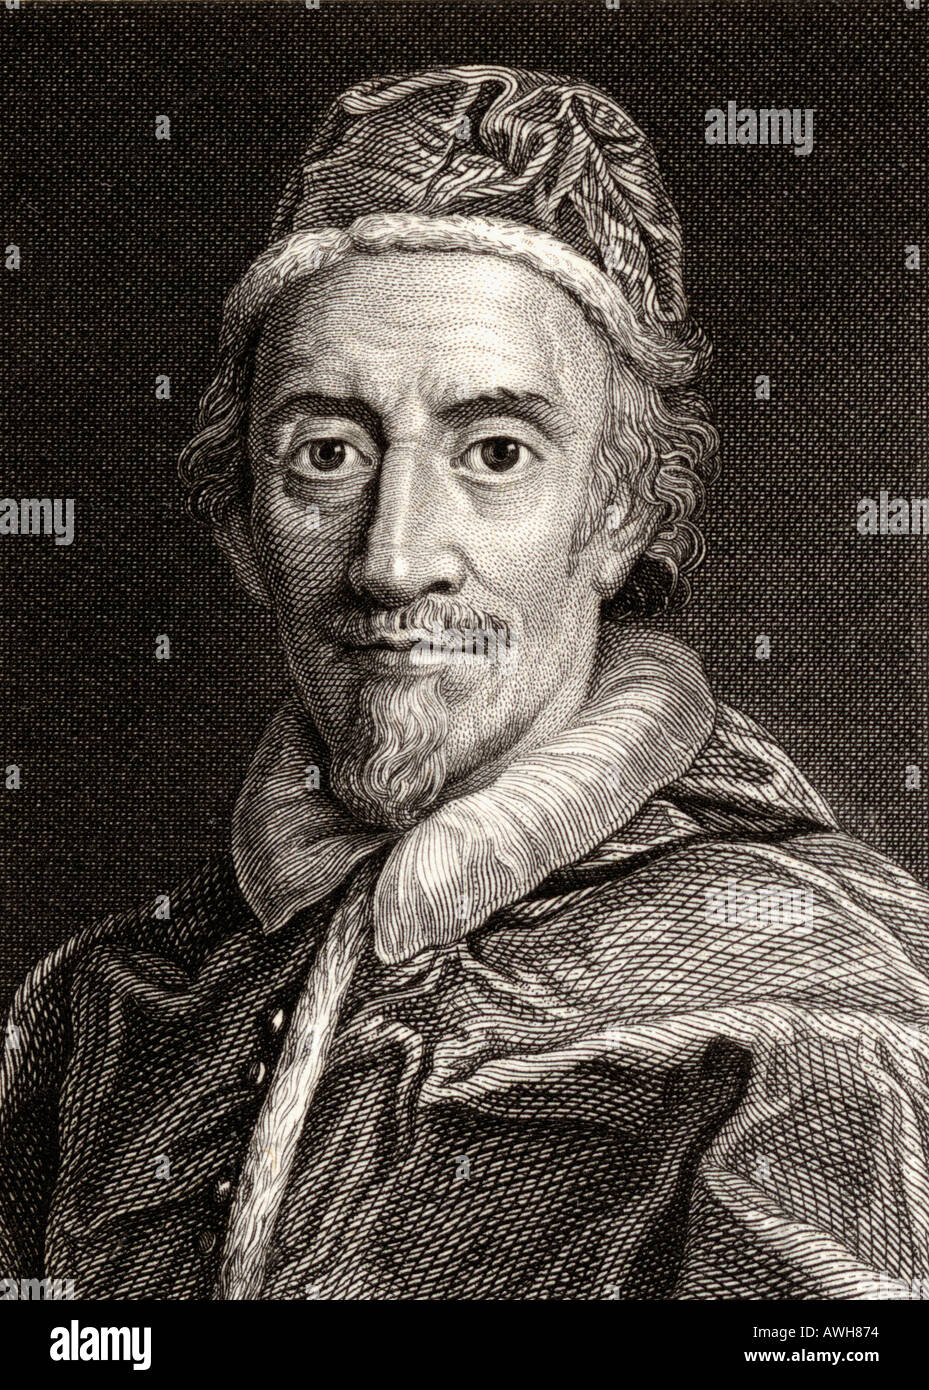 Pope Clemente IX, 1600 - 1669.  Original name Giulio Rospigliosi. Stock Photo